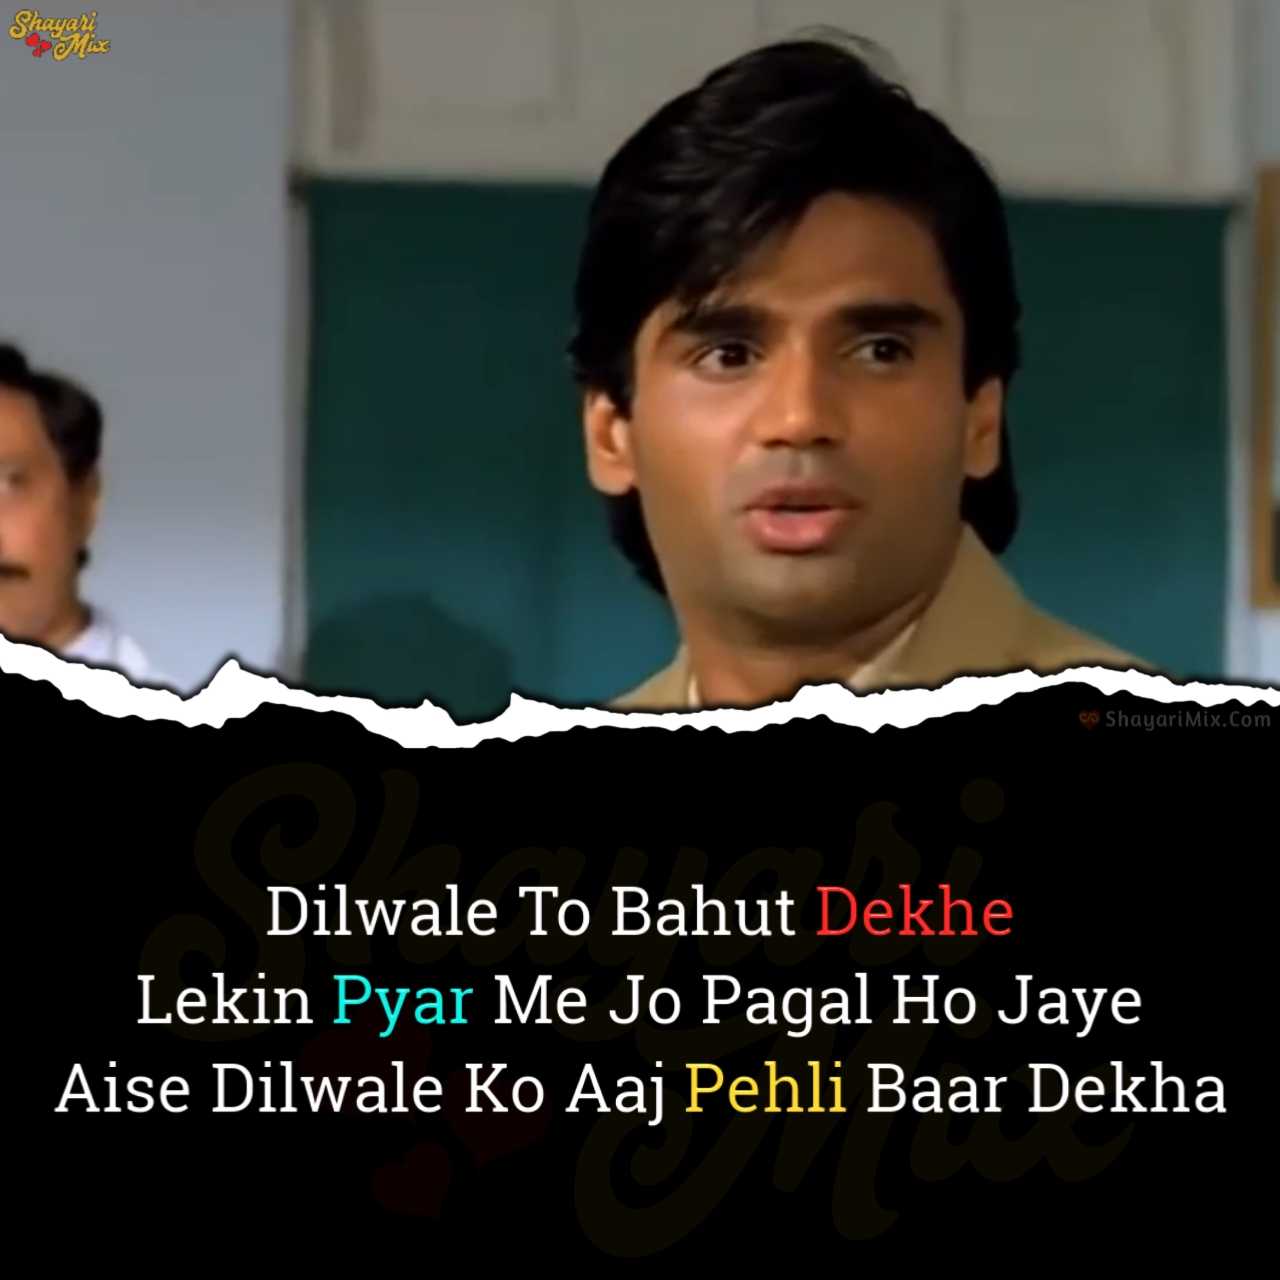 Dilwale By Ajay Devgan Top 10 Movie Dialogues - Shayari Mix